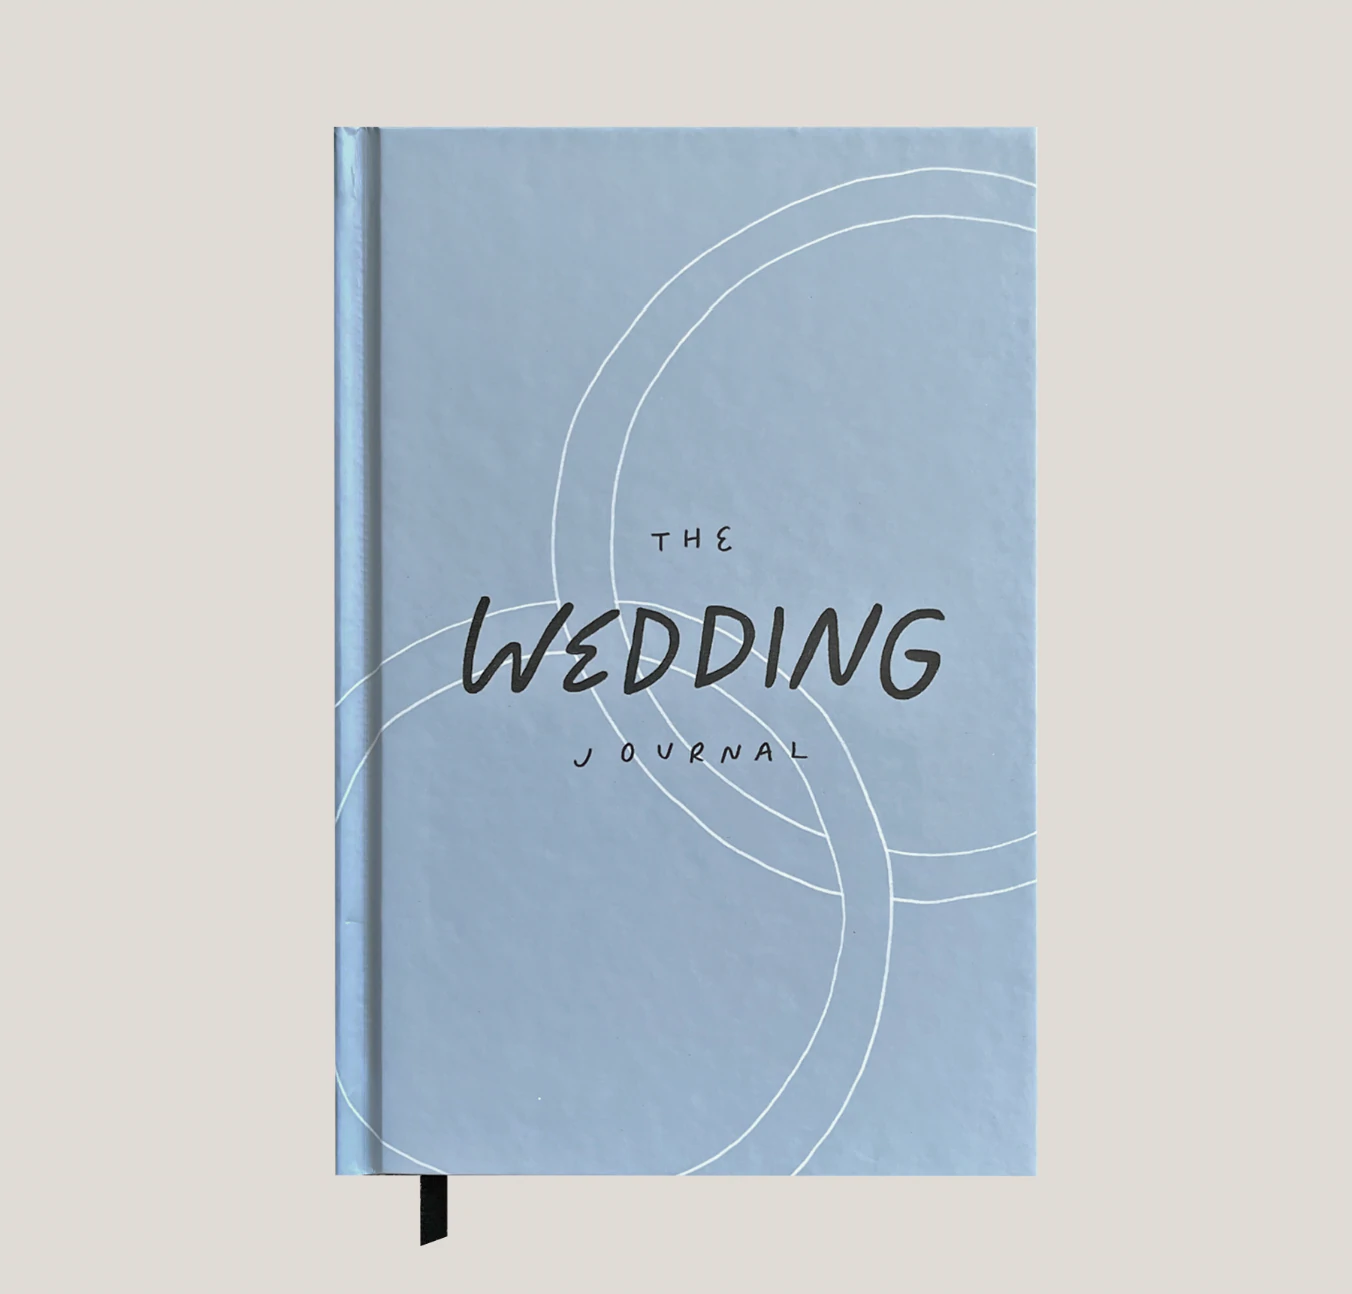 "The Wedding Journal"